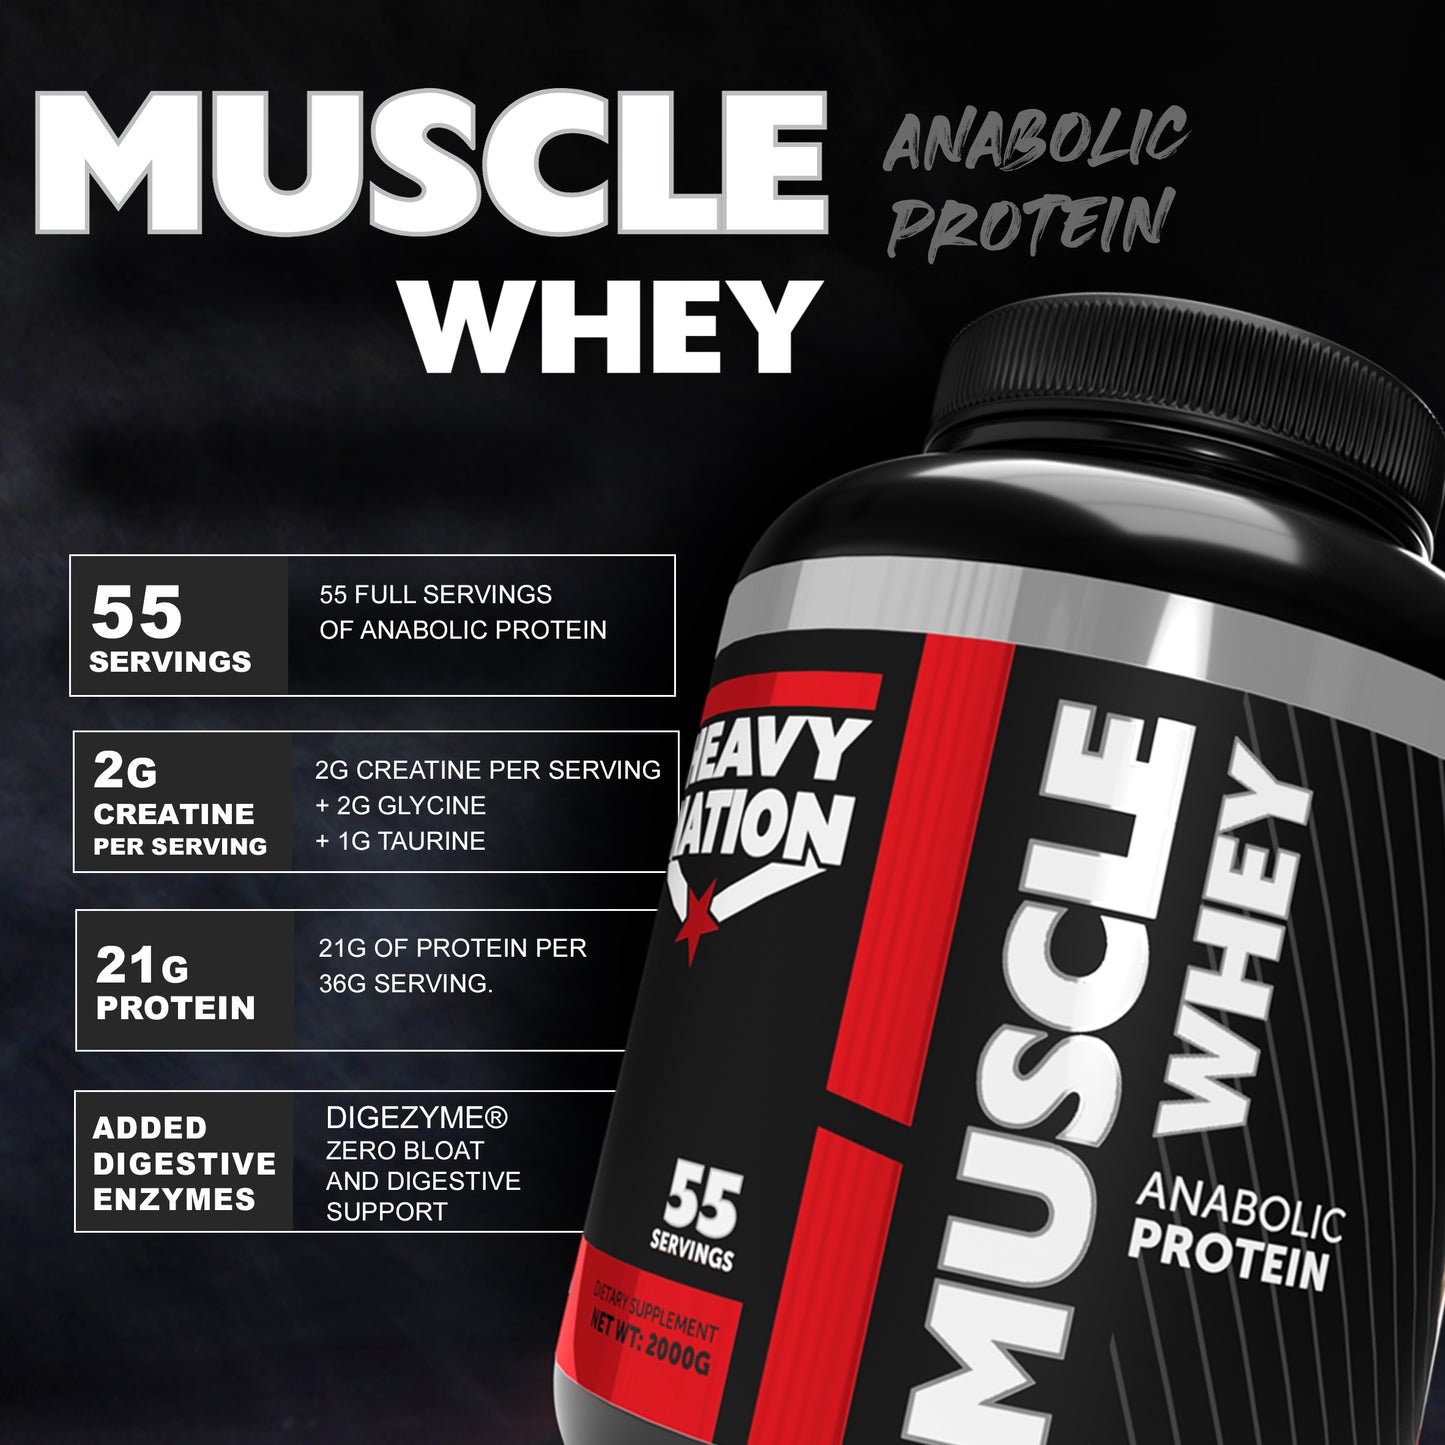 MUSCLE WHEY Anabolic